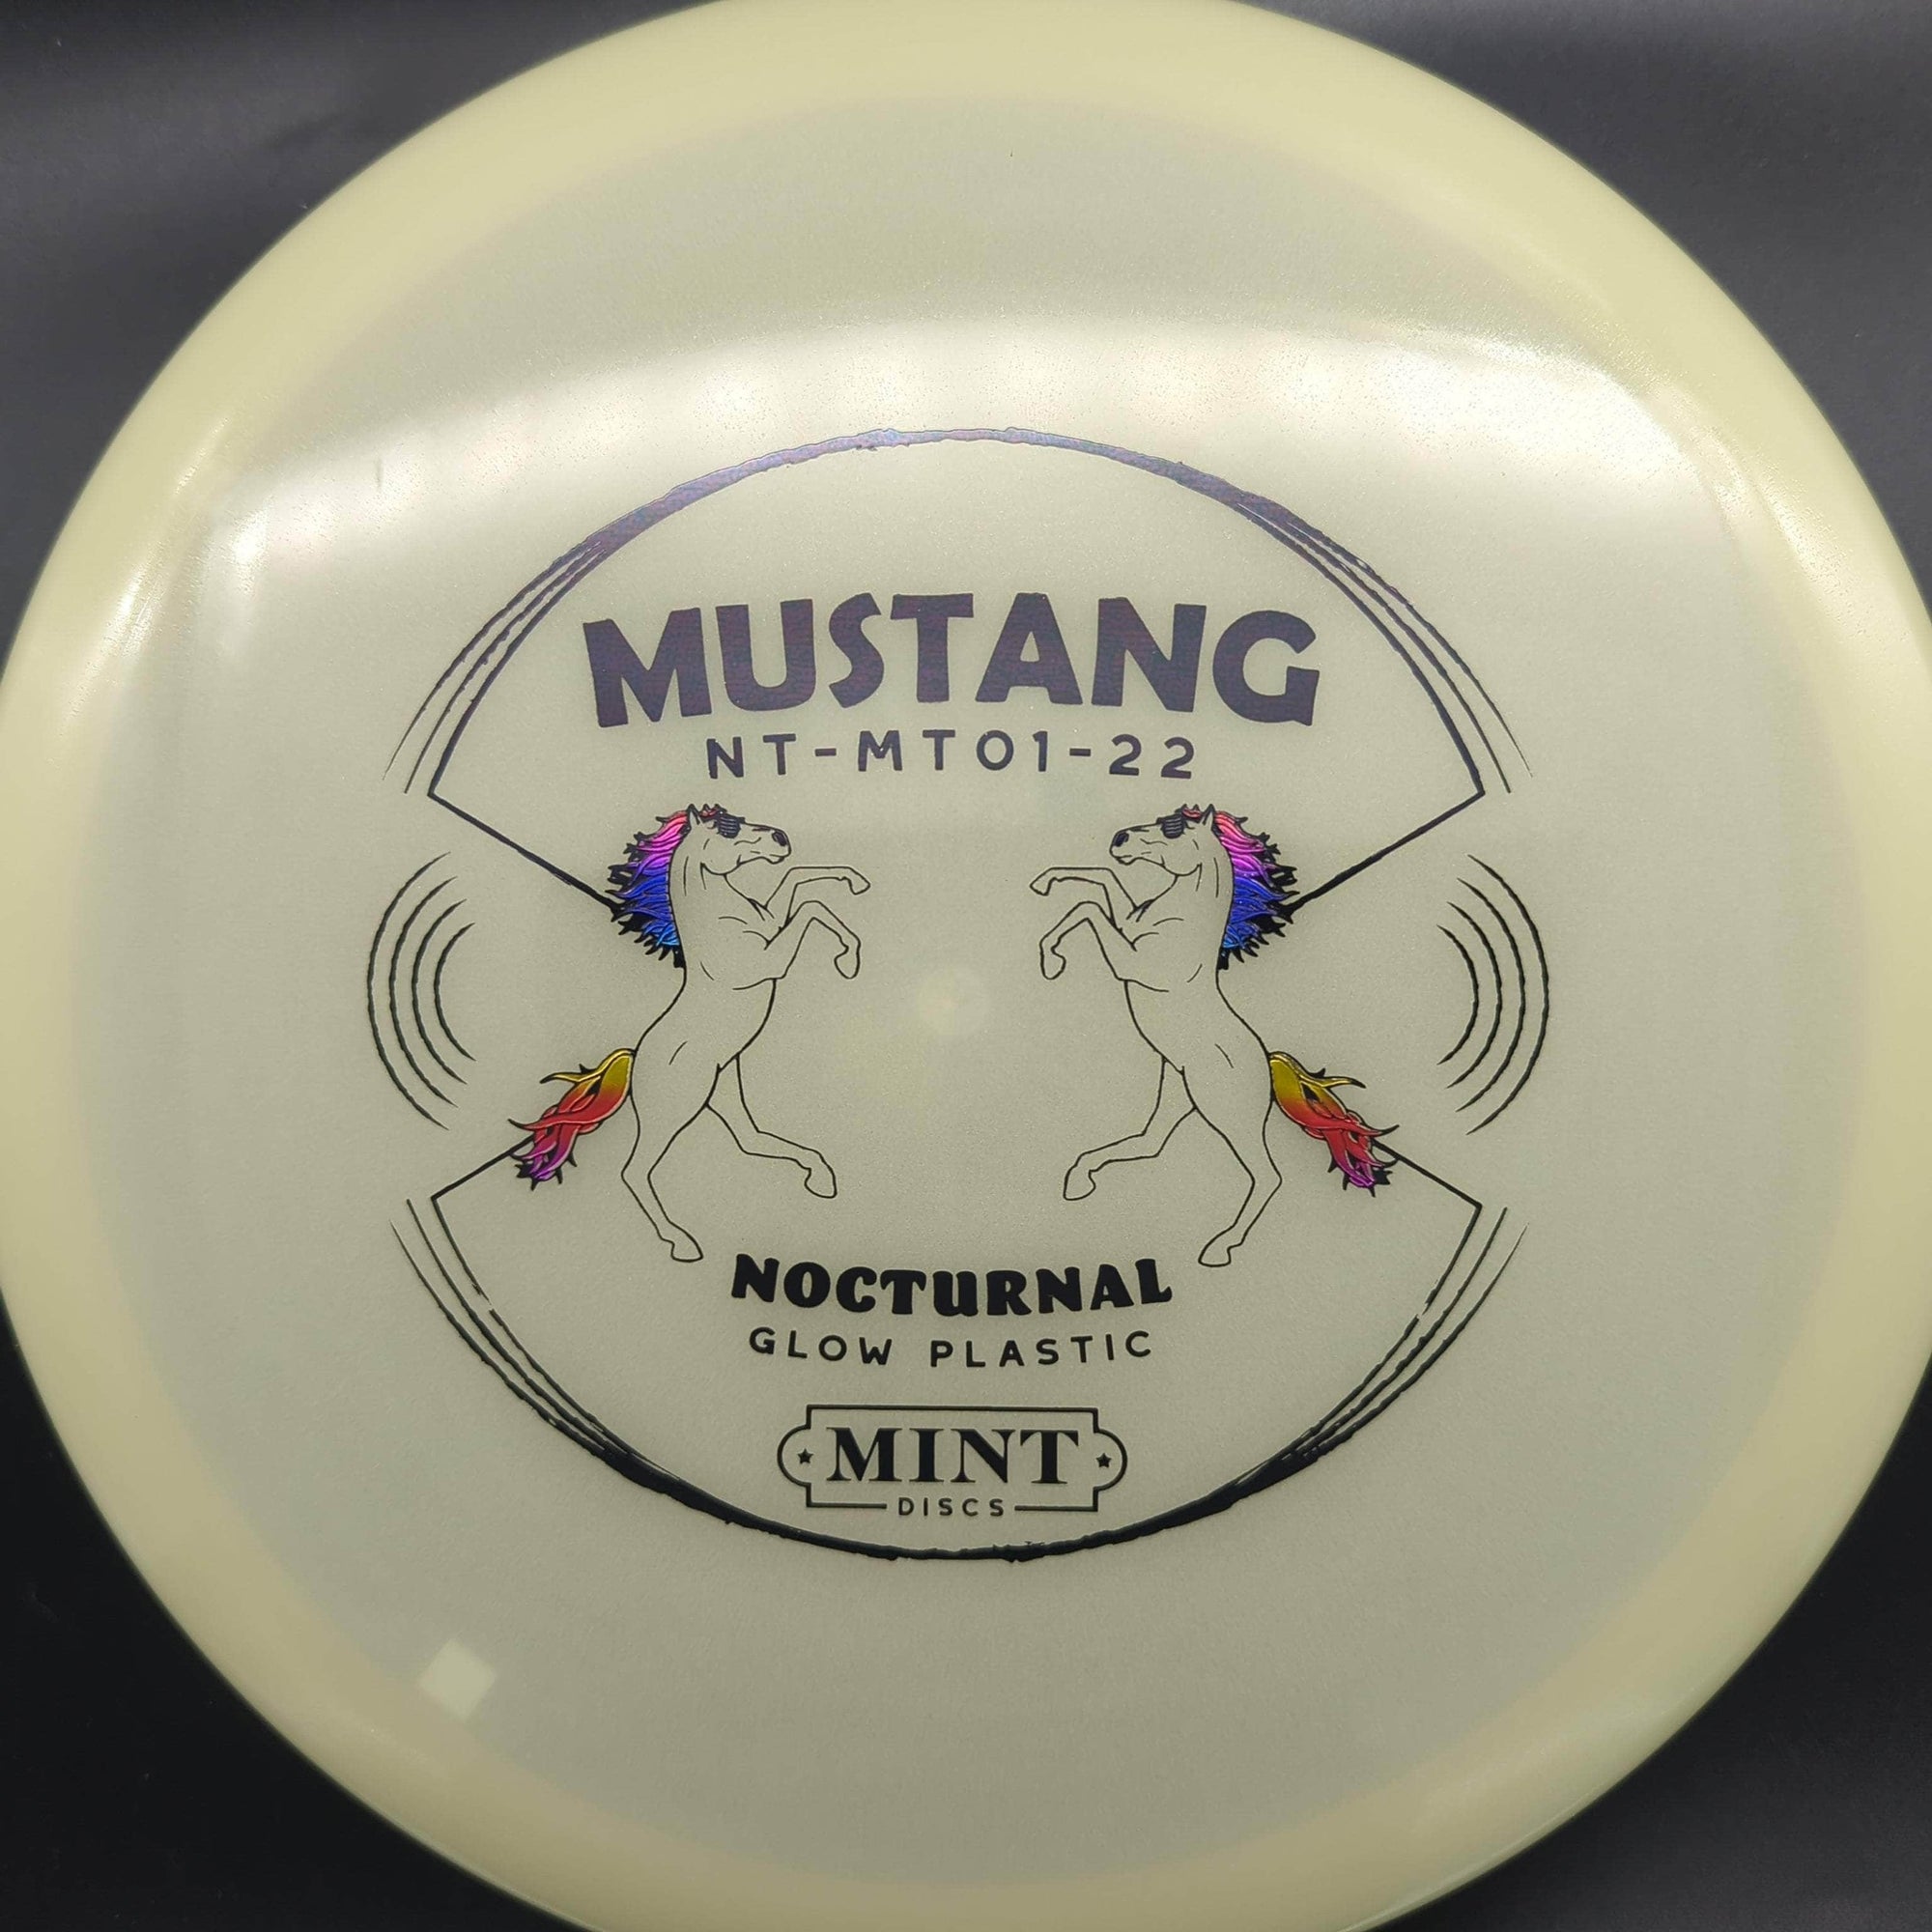 Mint Discs Mid Range Glow Rainbow Stamp 177g 3 Mustang - Nocturnal Plastic